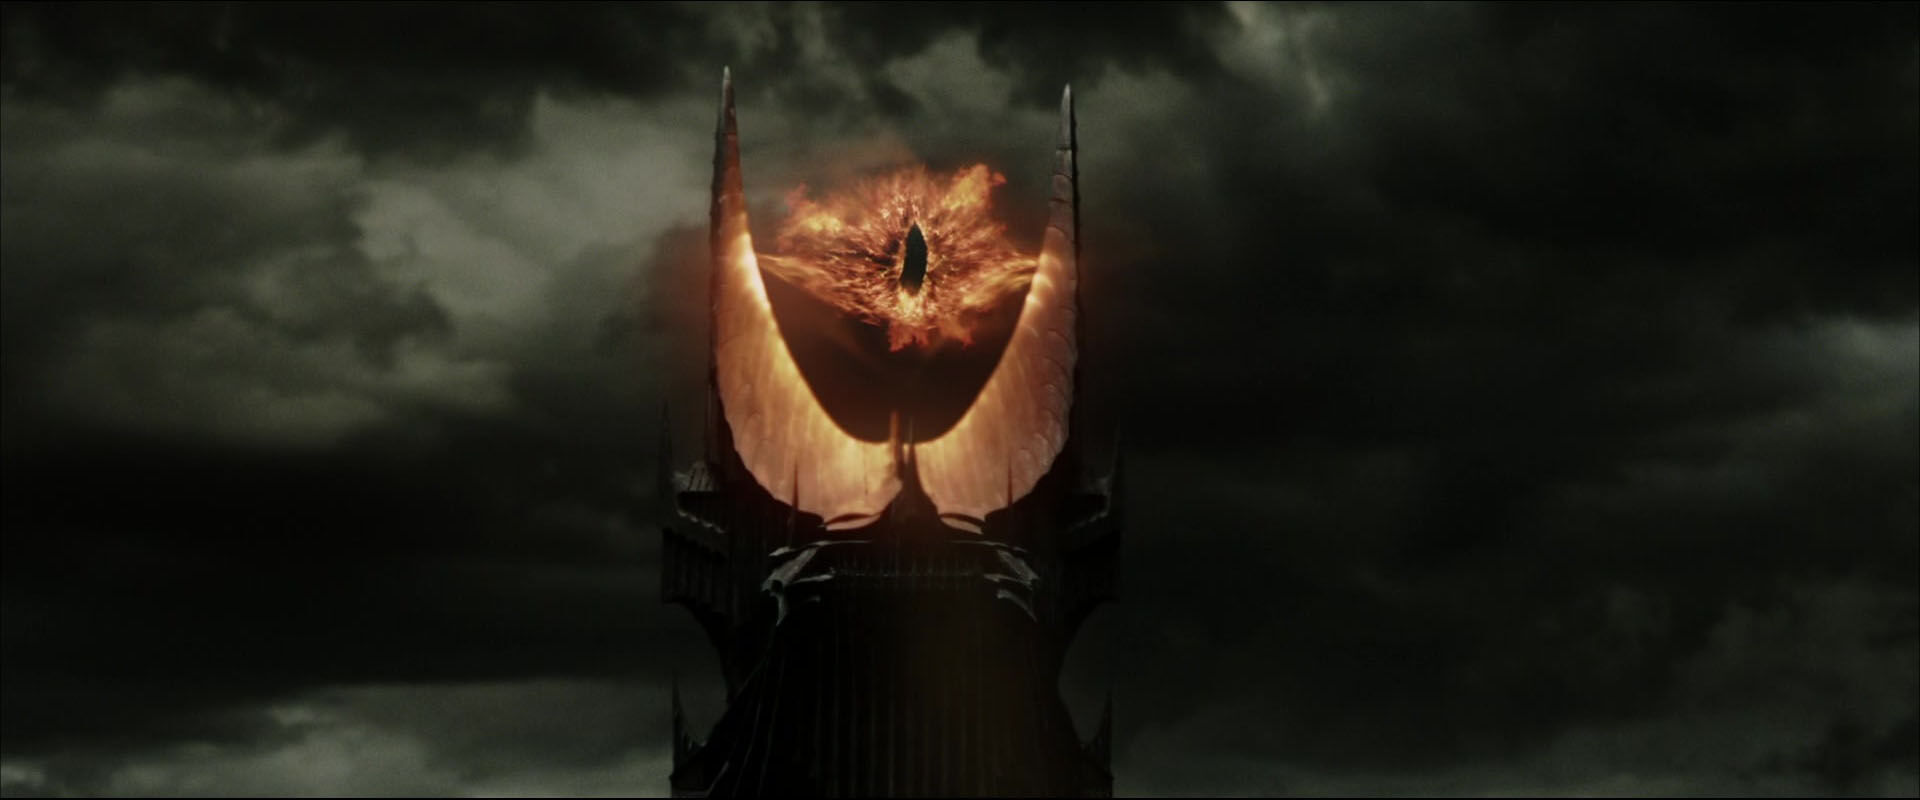 Barad-dûr (The Dark Tower - Lord of the Rings) | Eddie Kent Ceramics